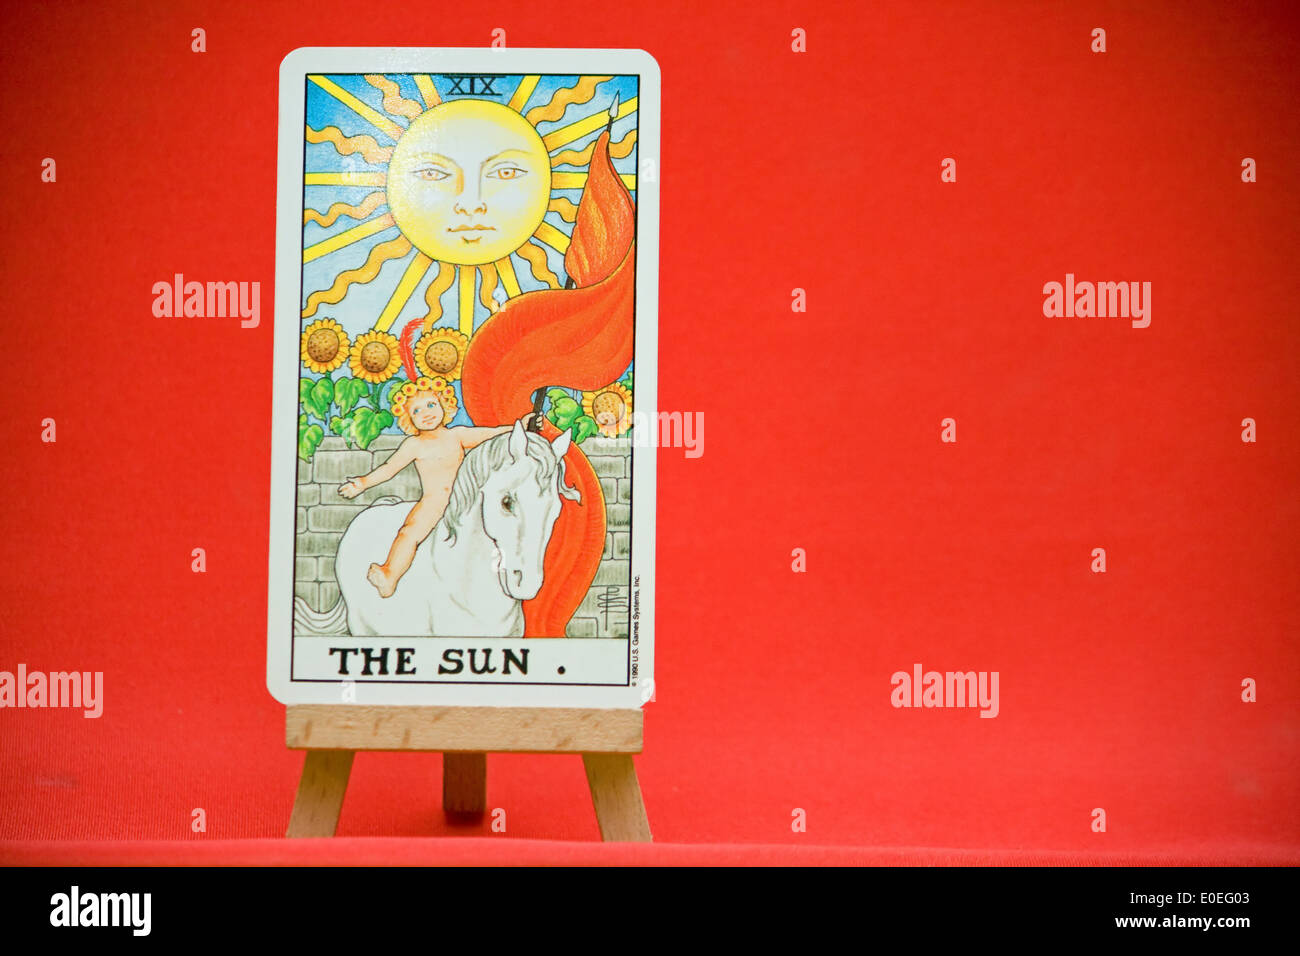 The Sun. From the Universal Waite tarot deck. Stock Photo